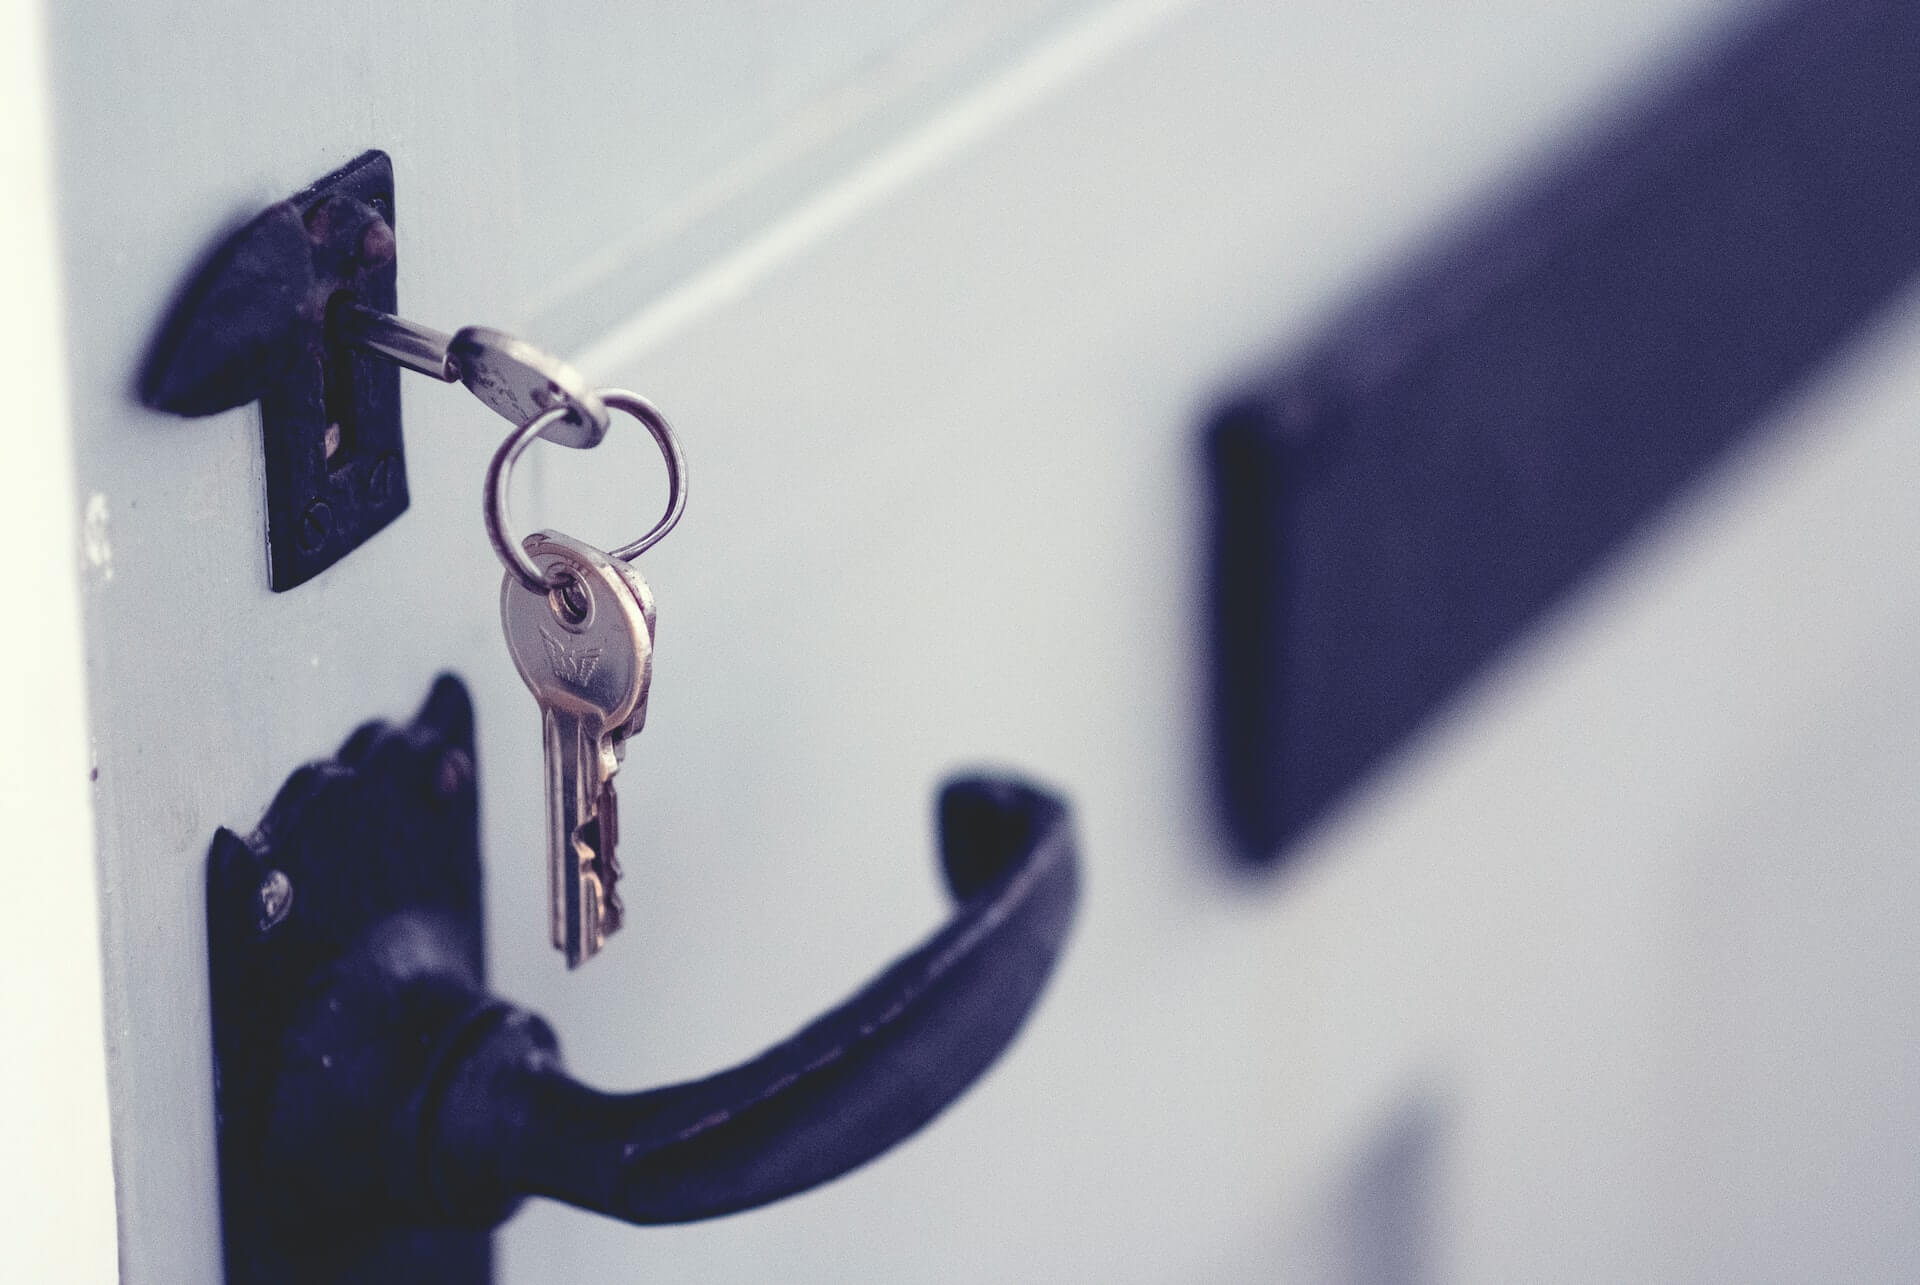 A close up of keys in a door lock